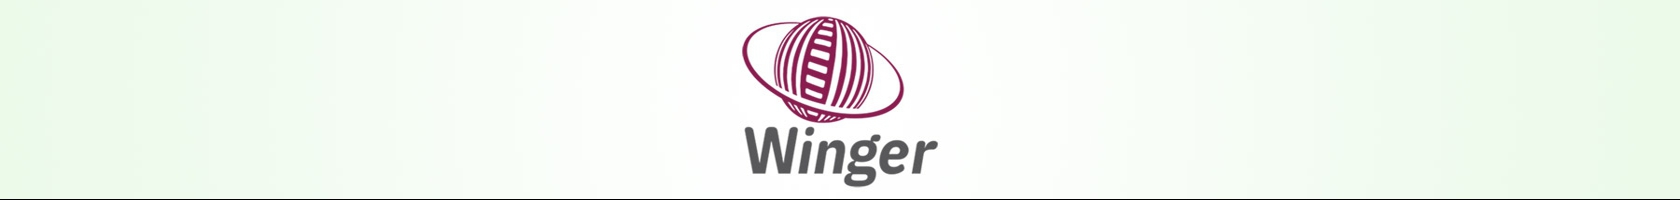  WingerClub